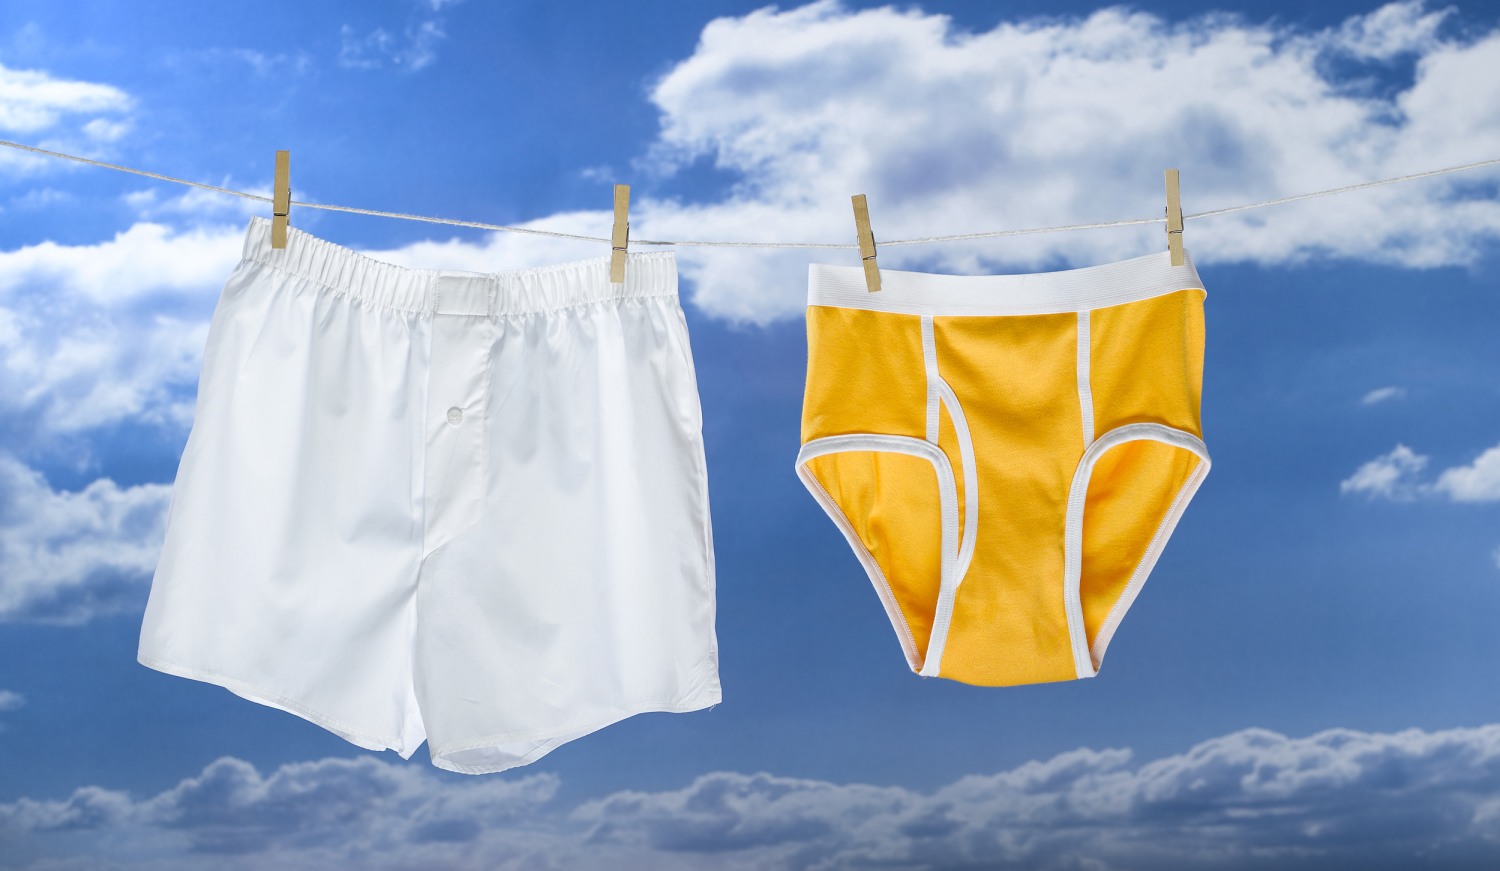 Tight underwear impacts most on male fertility